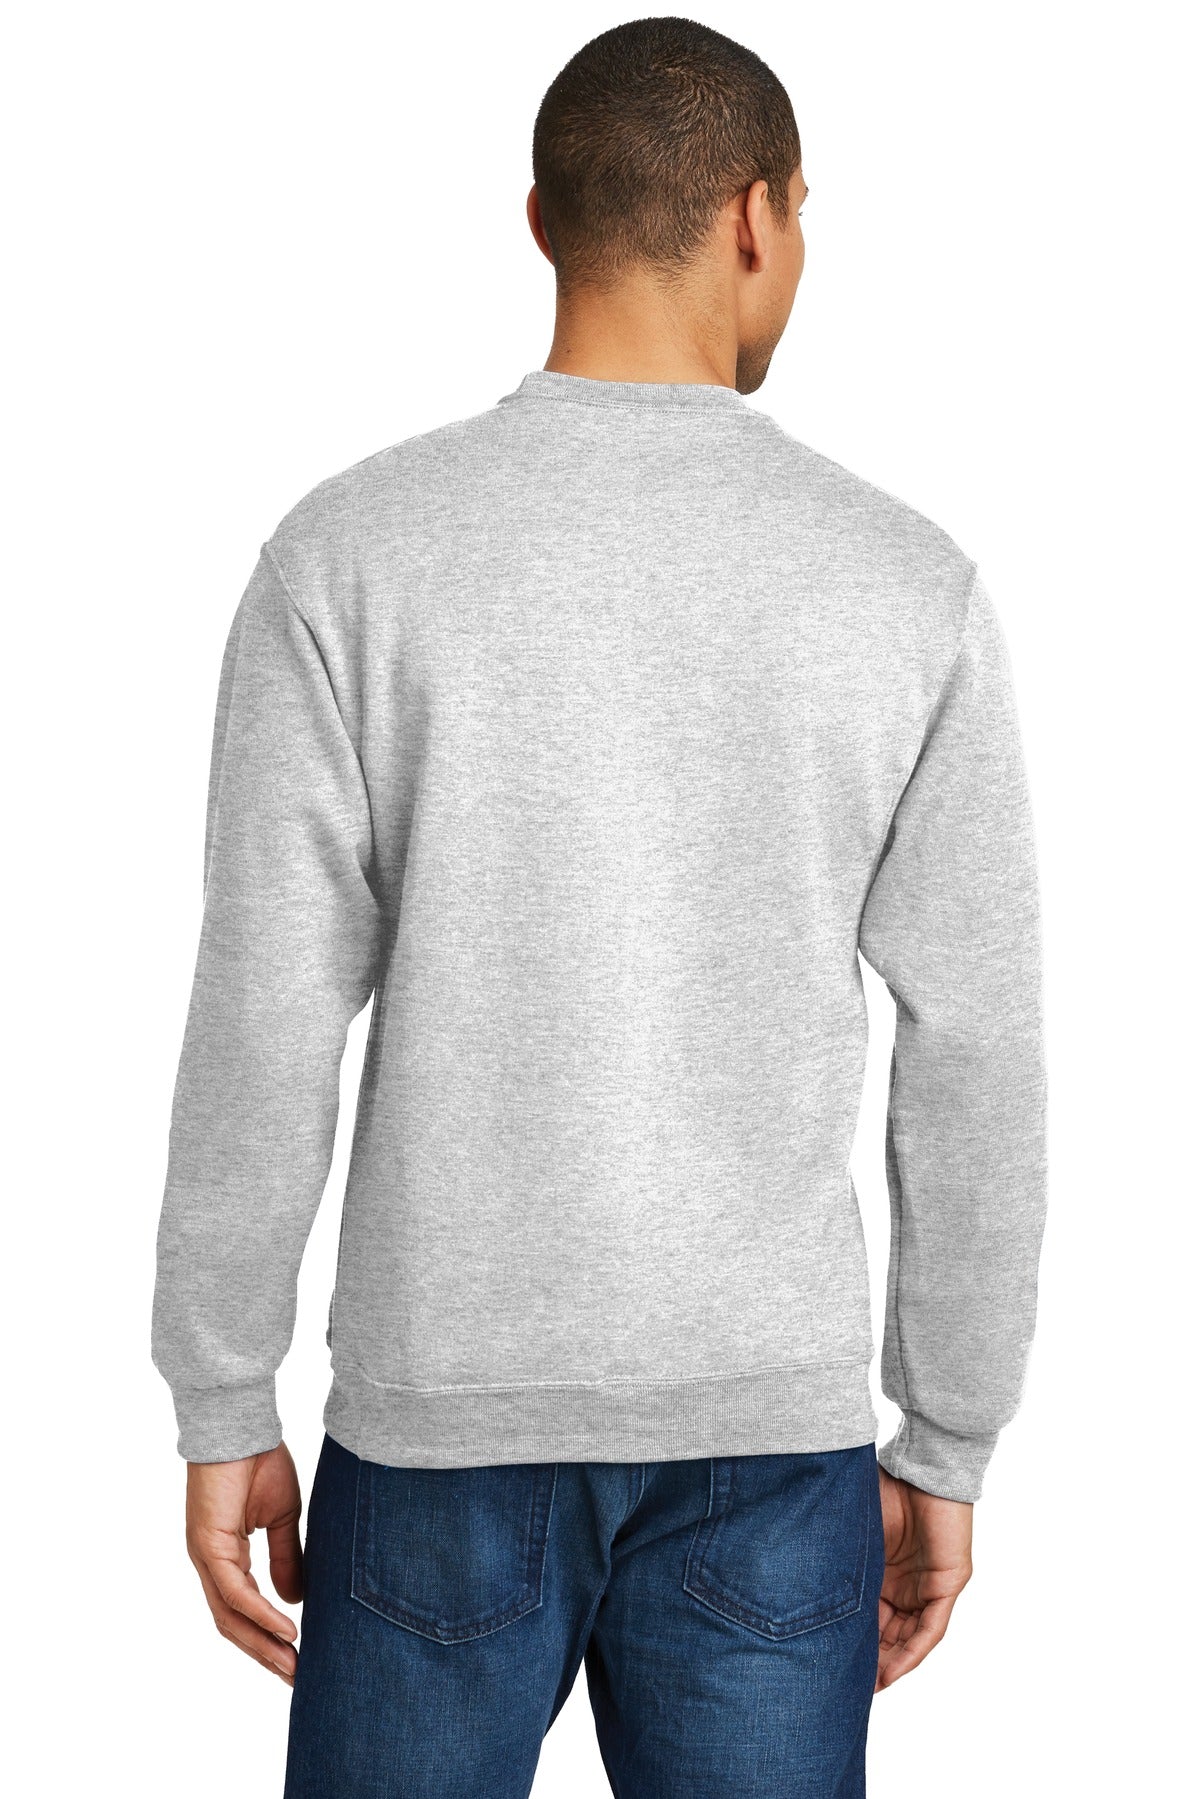 JERZEES® - NuBlend® Crewneck Sweatshirt. 562M - DFW Impression